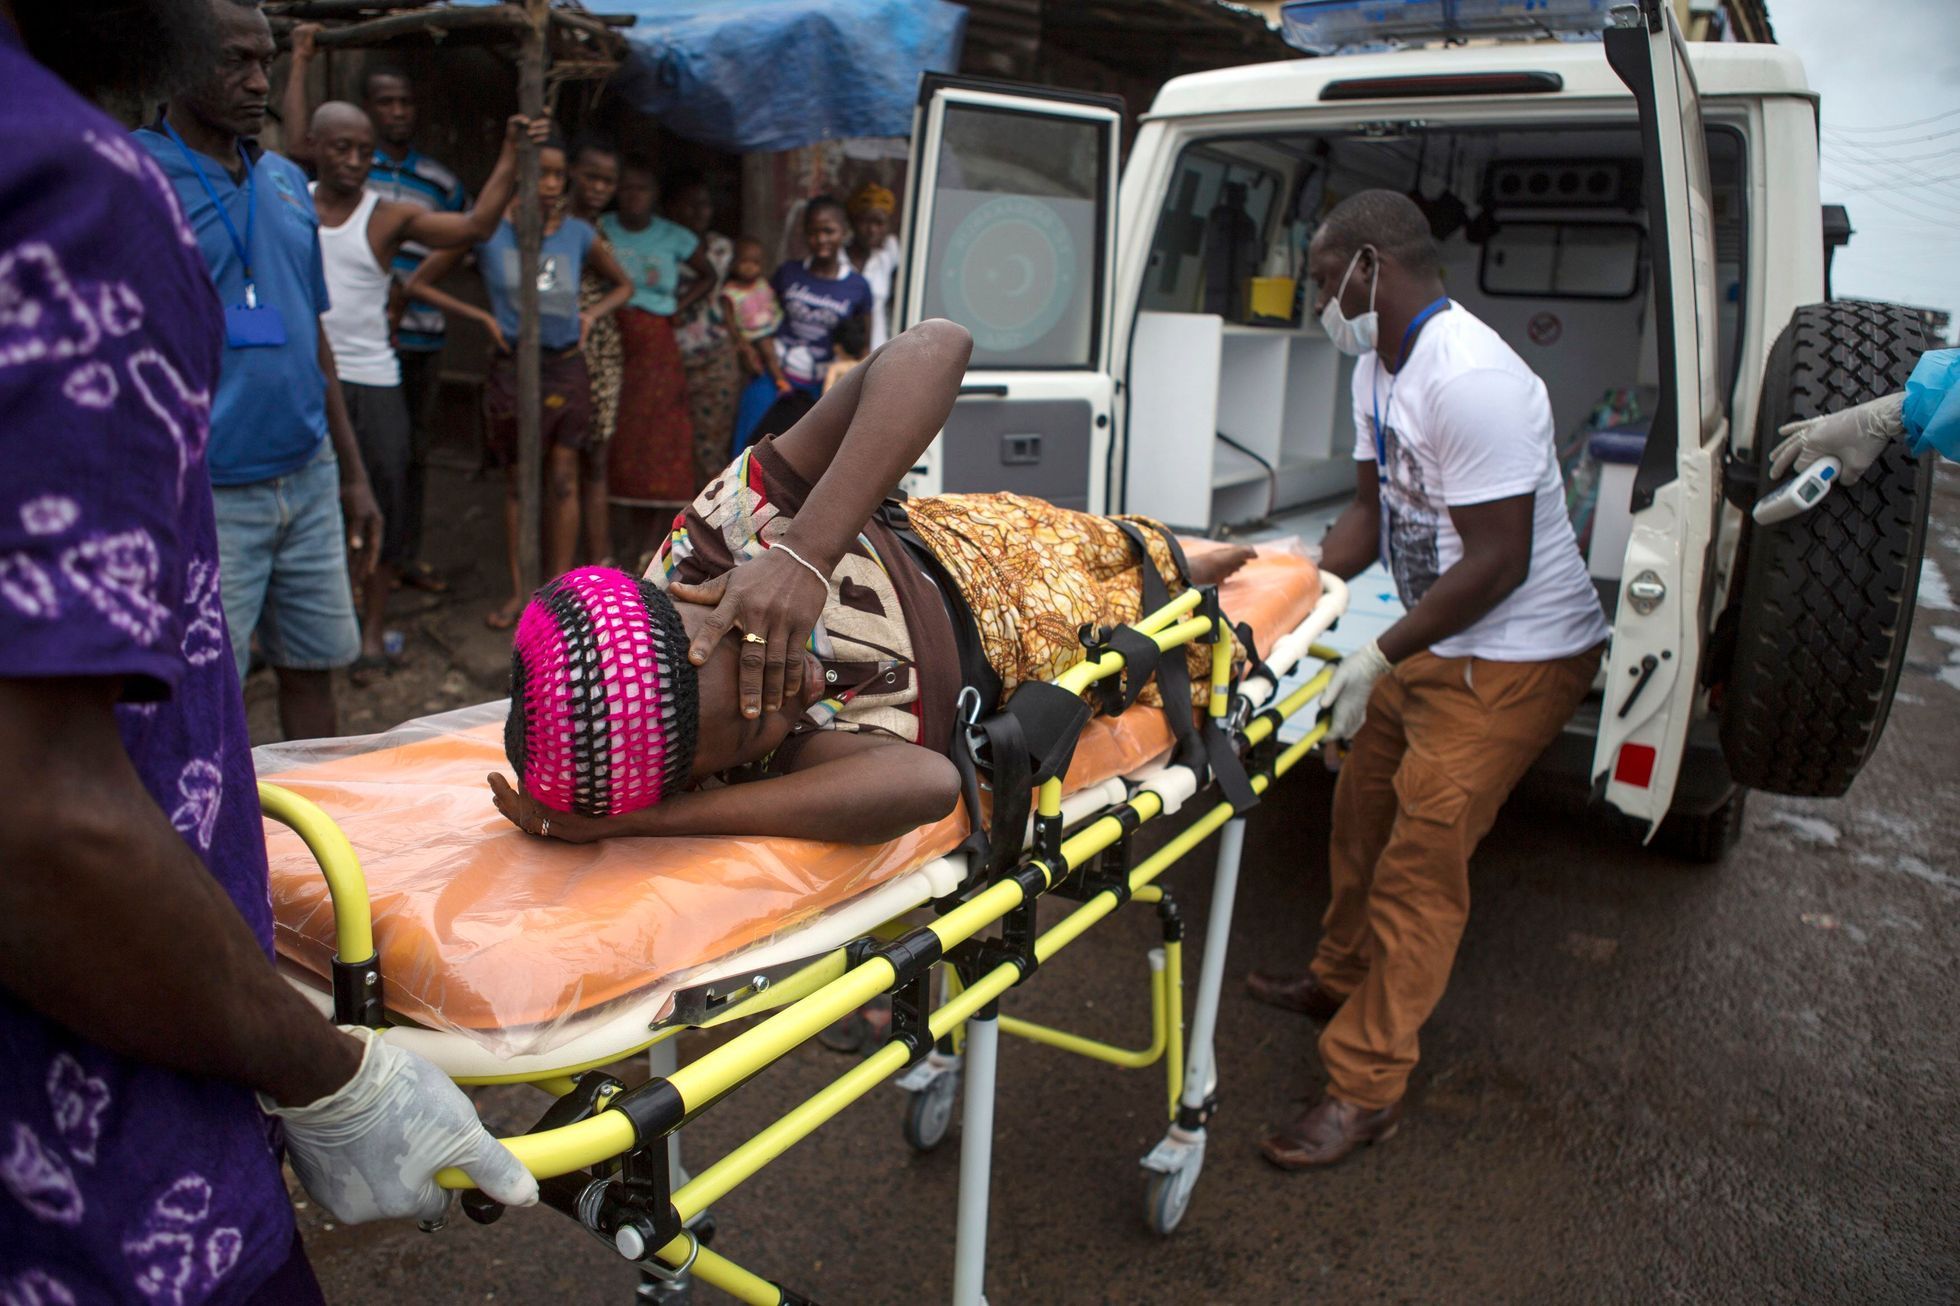 Ebola - podezření na nákazu ebolou v Sierra Leone